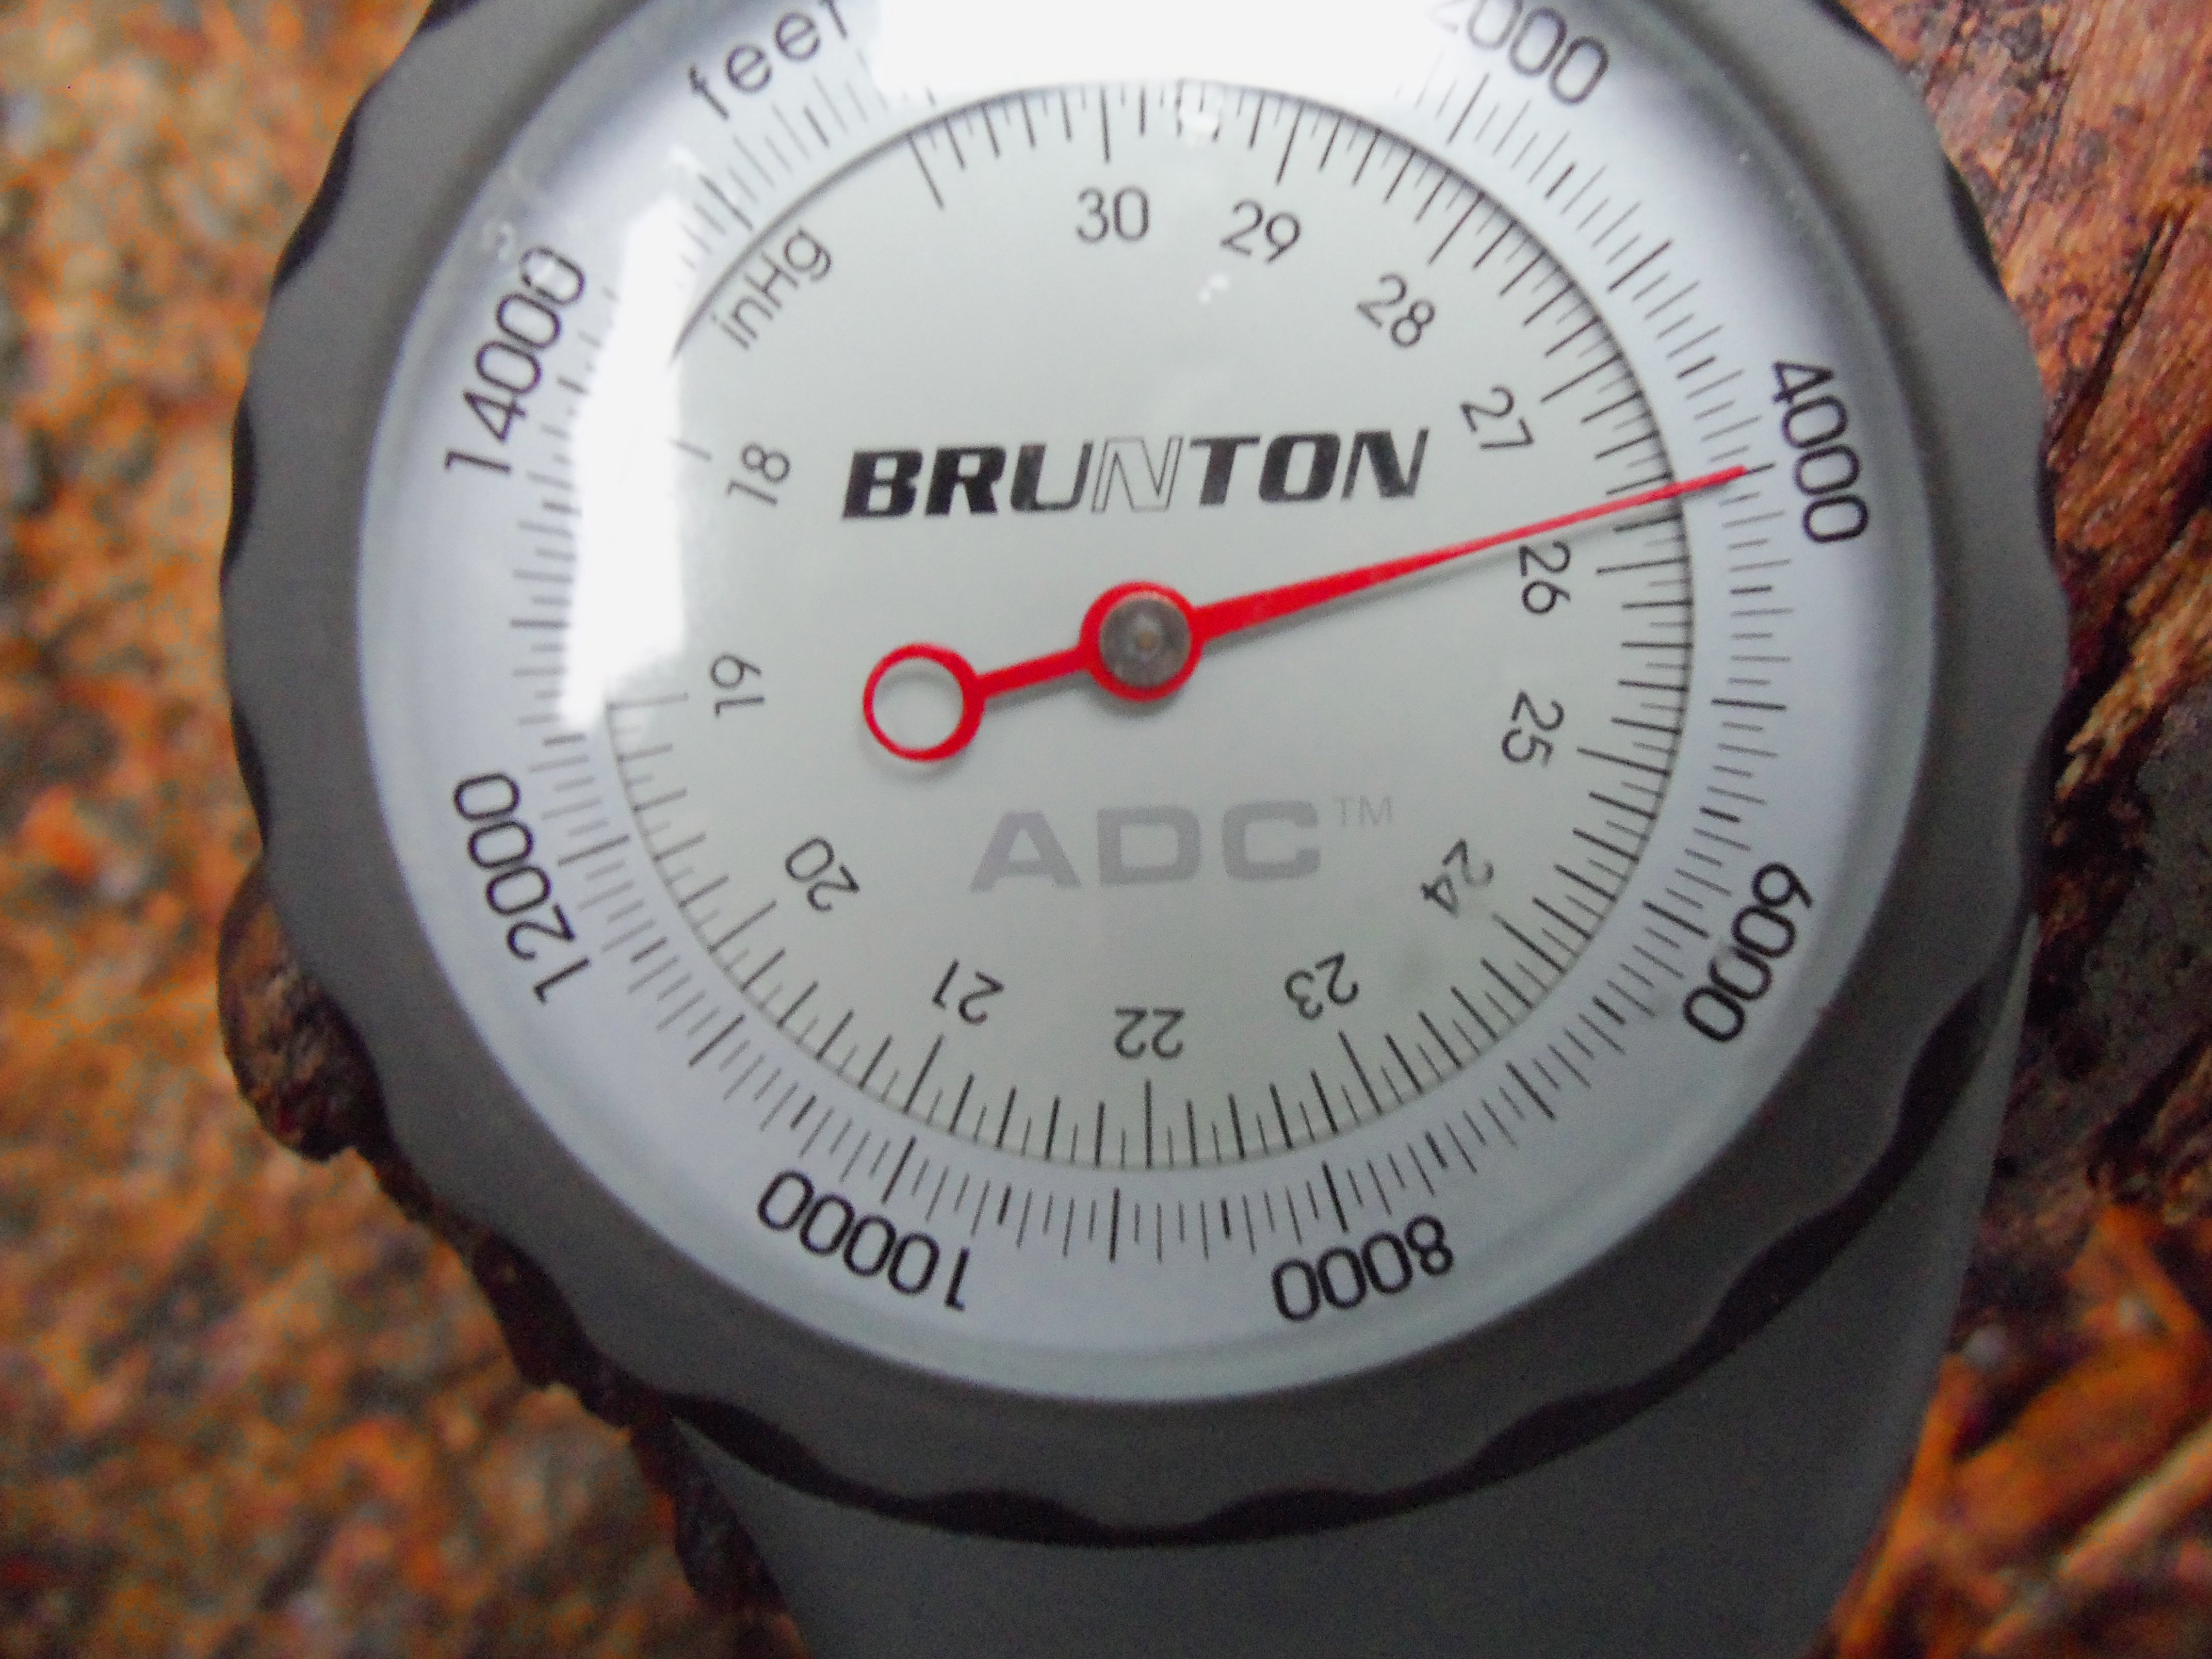 Brunton altimeter, showing 4000 feet